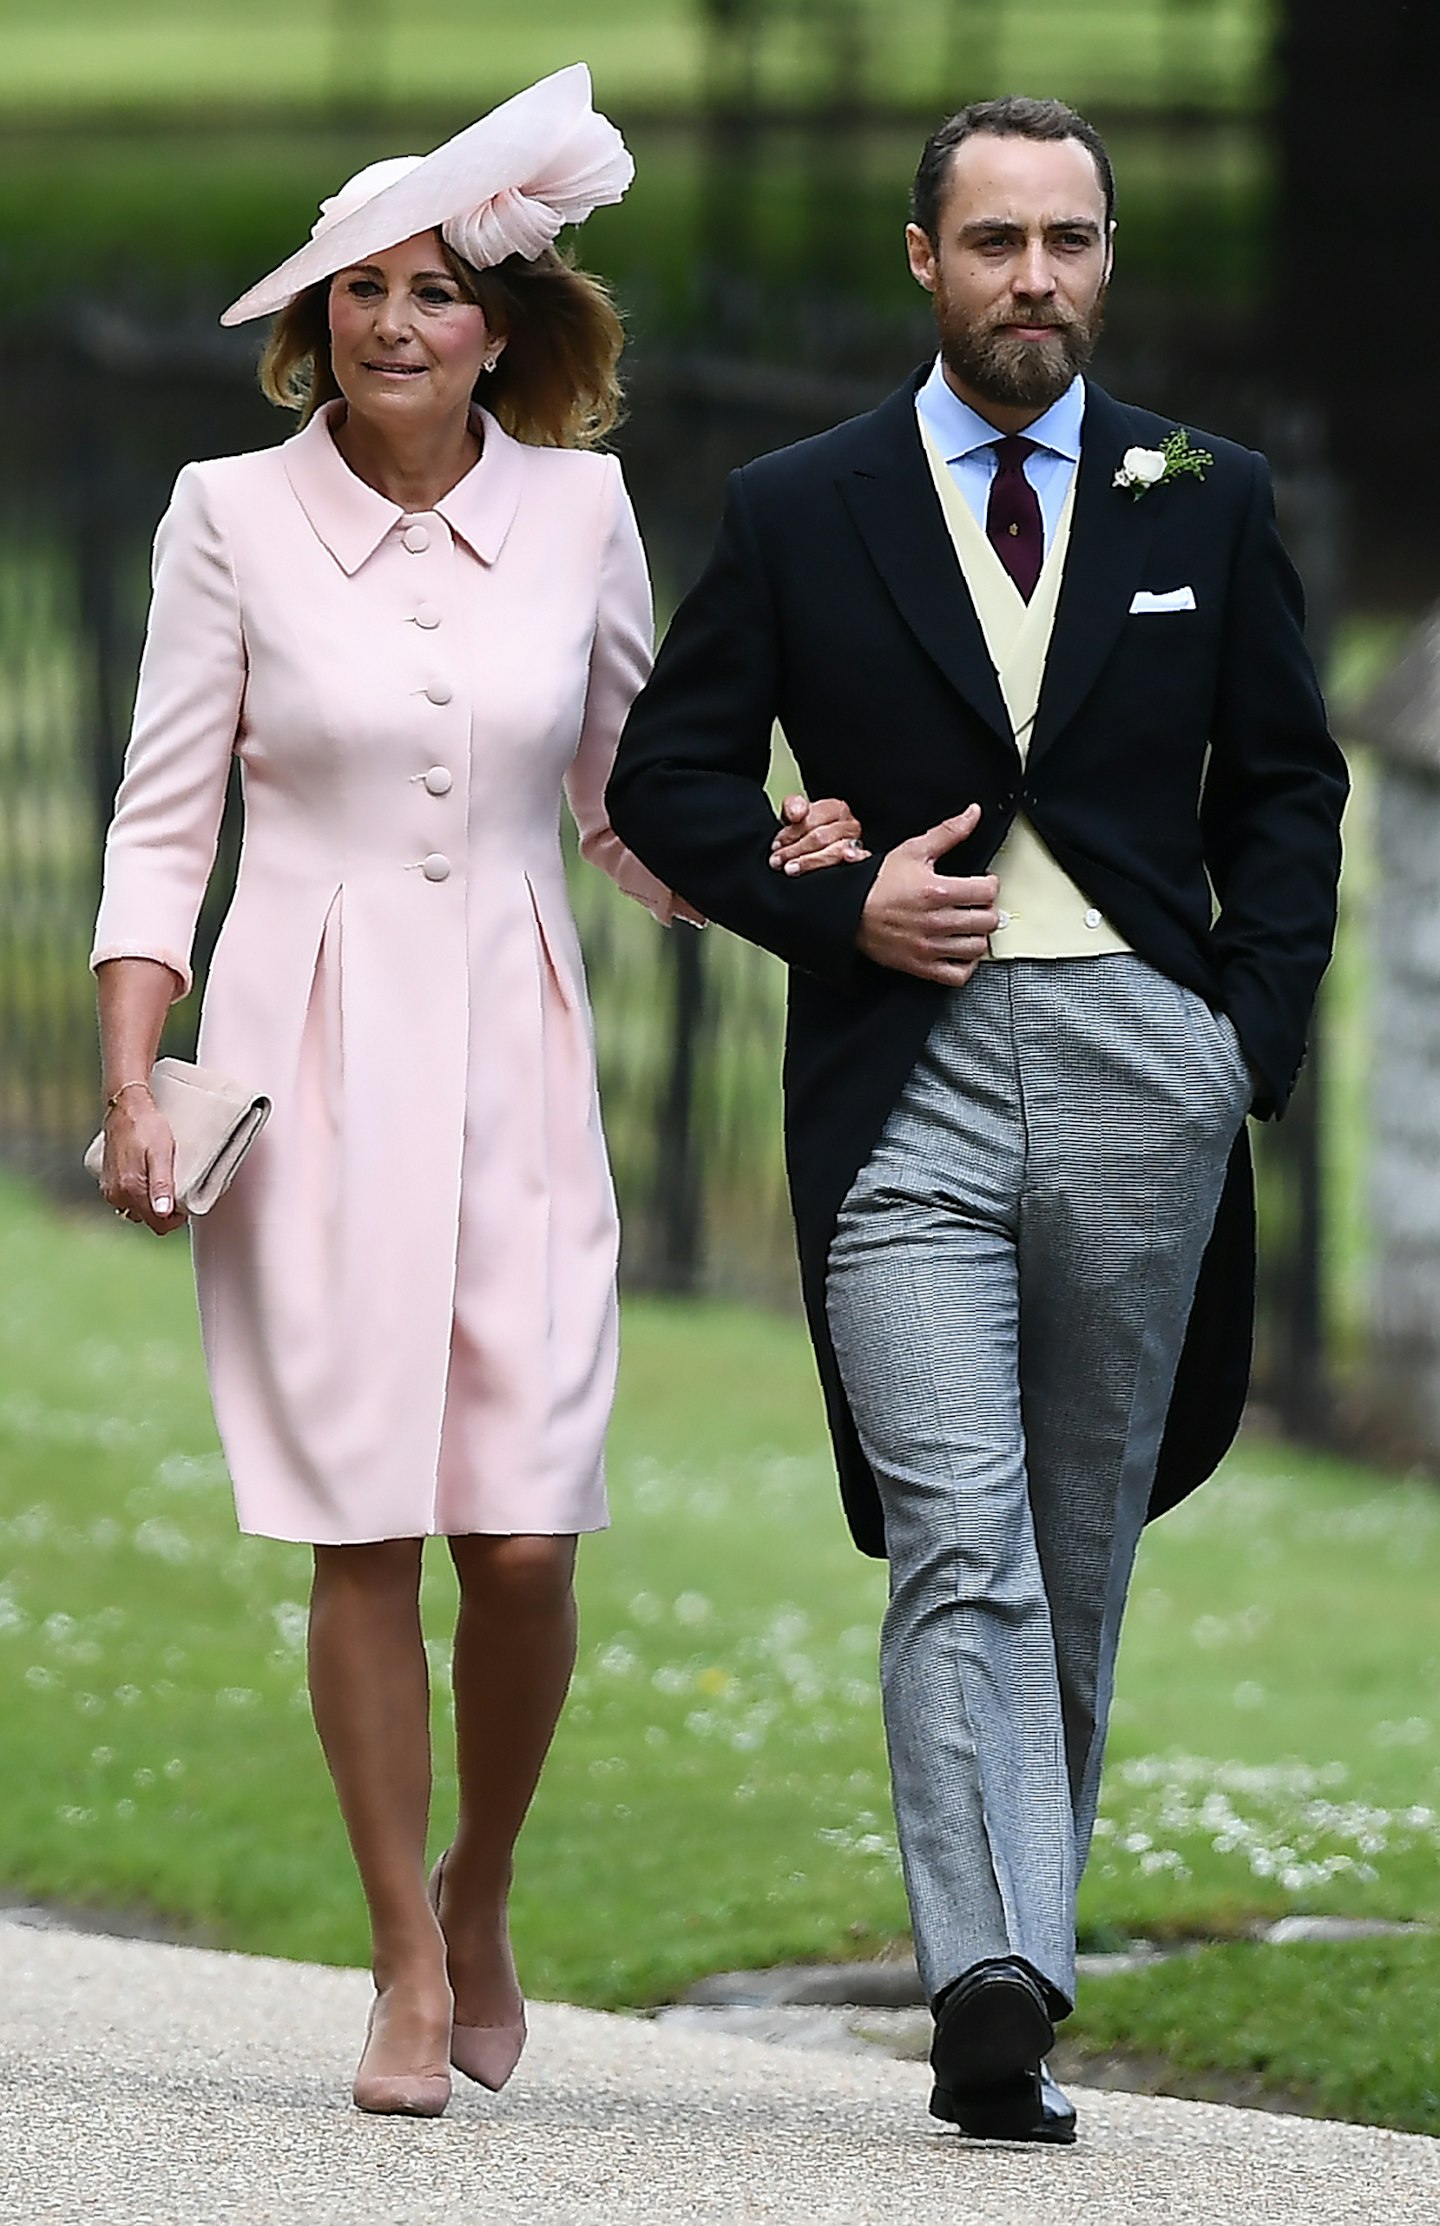 Carole Middleton and James Middleton at the wedding Of Pippa Middleton and James Matthews